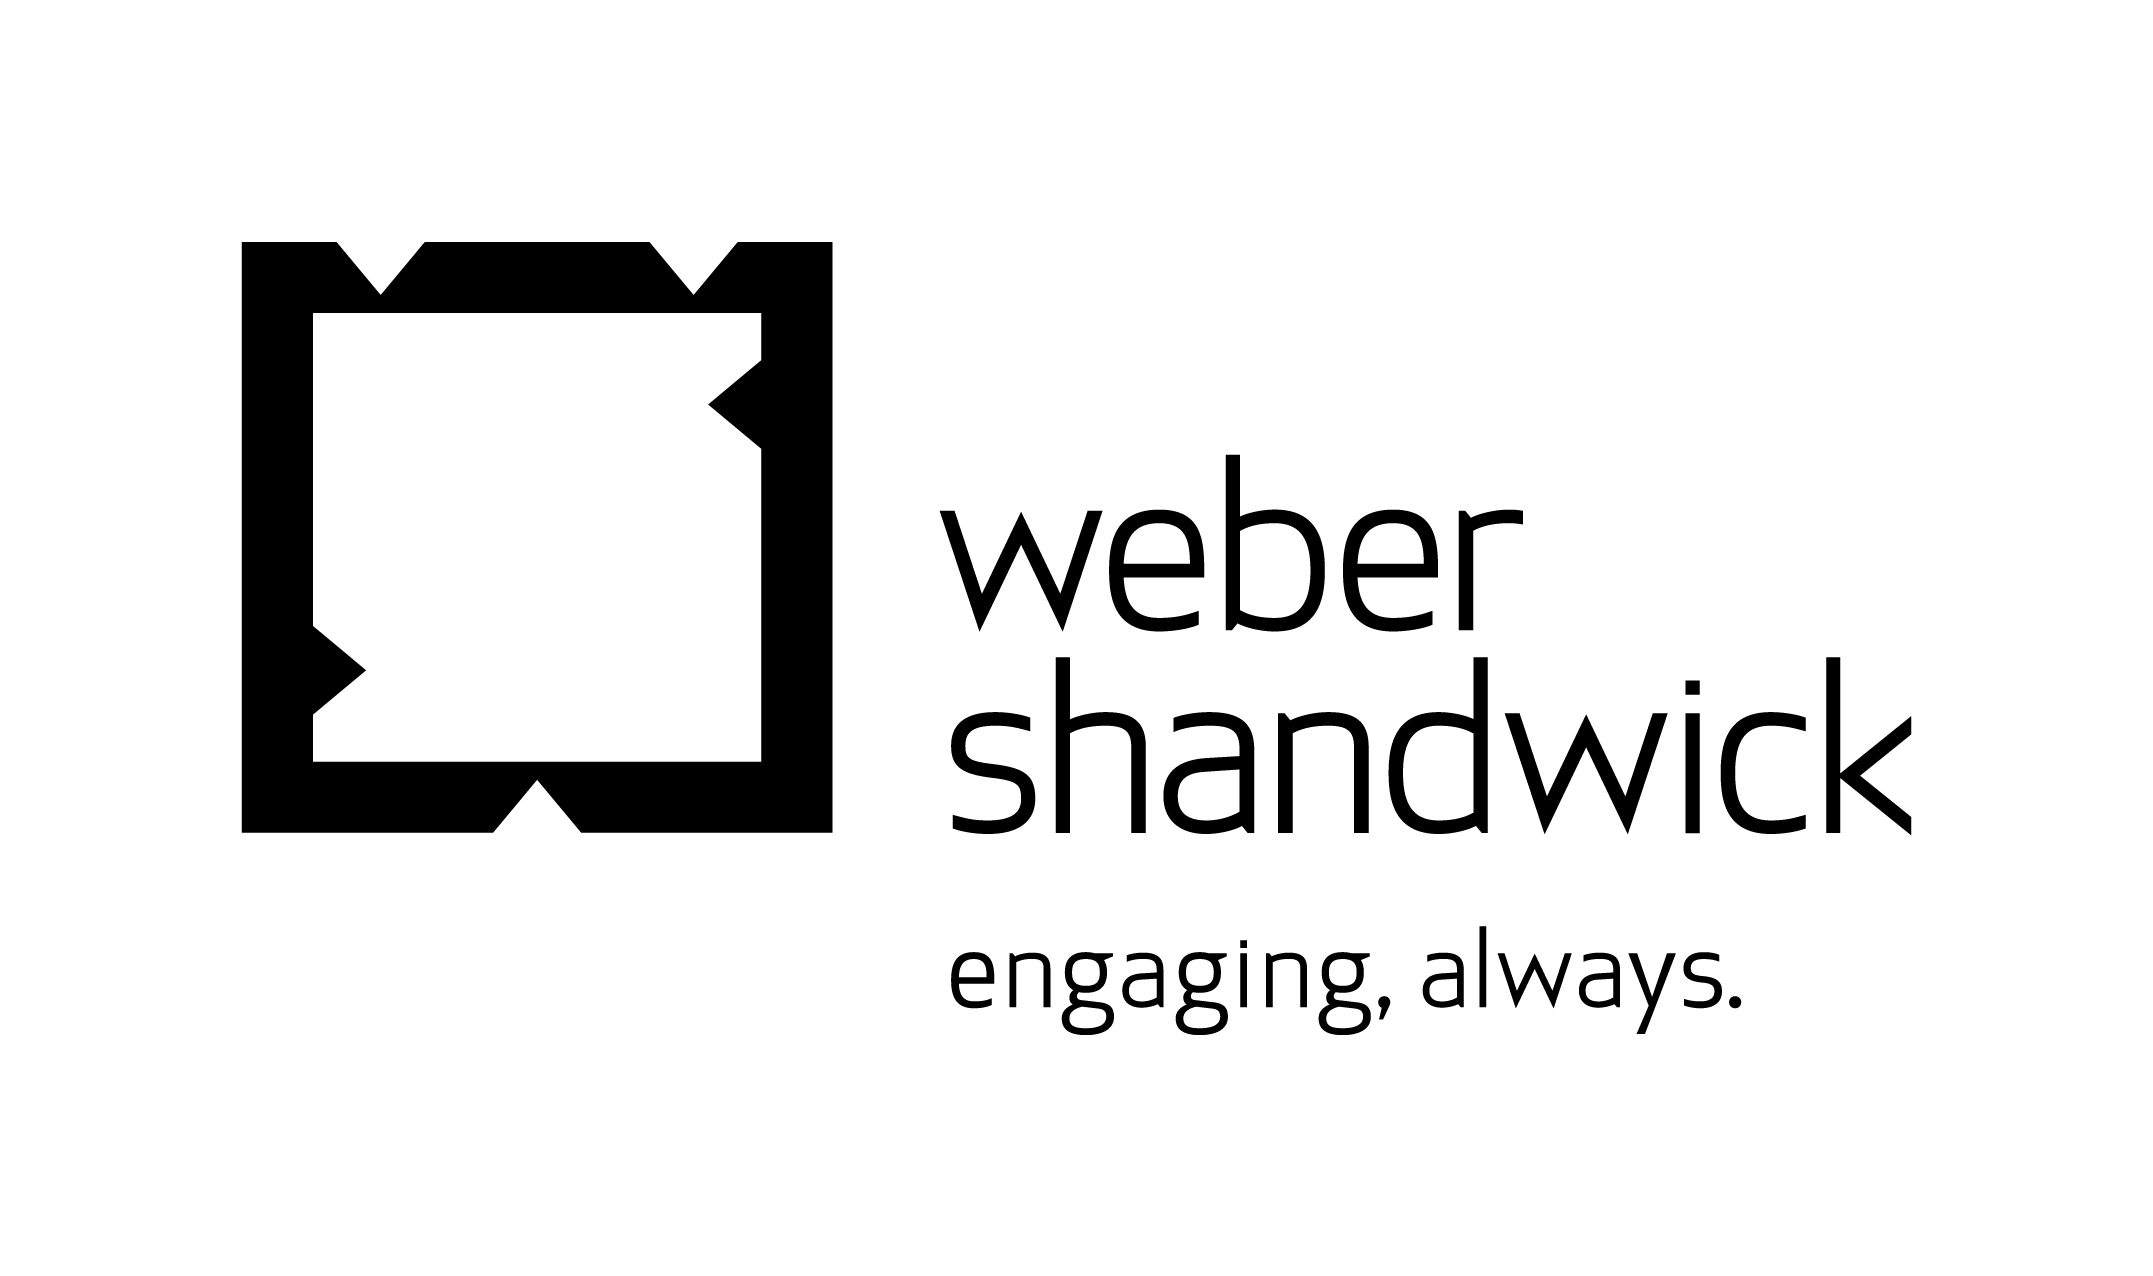  Top Public Relations Company Logo: Weber Shandwick